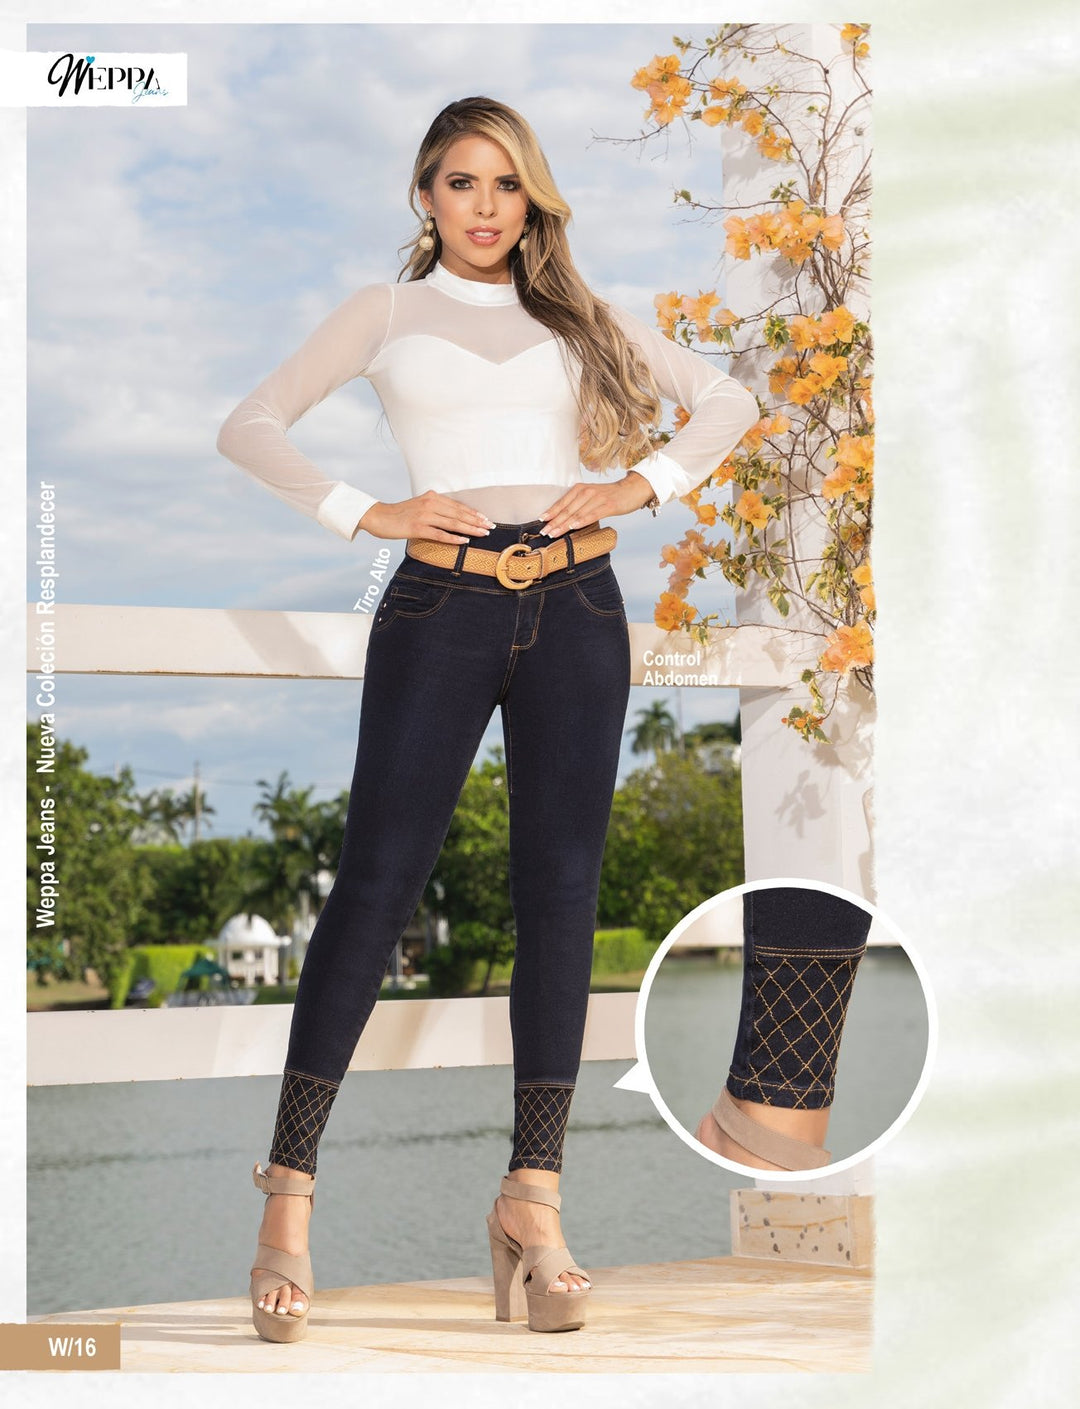 Jeans Colombianos Cintura Alta Pantalón Para Mujer Colombian Jeans High  Waist